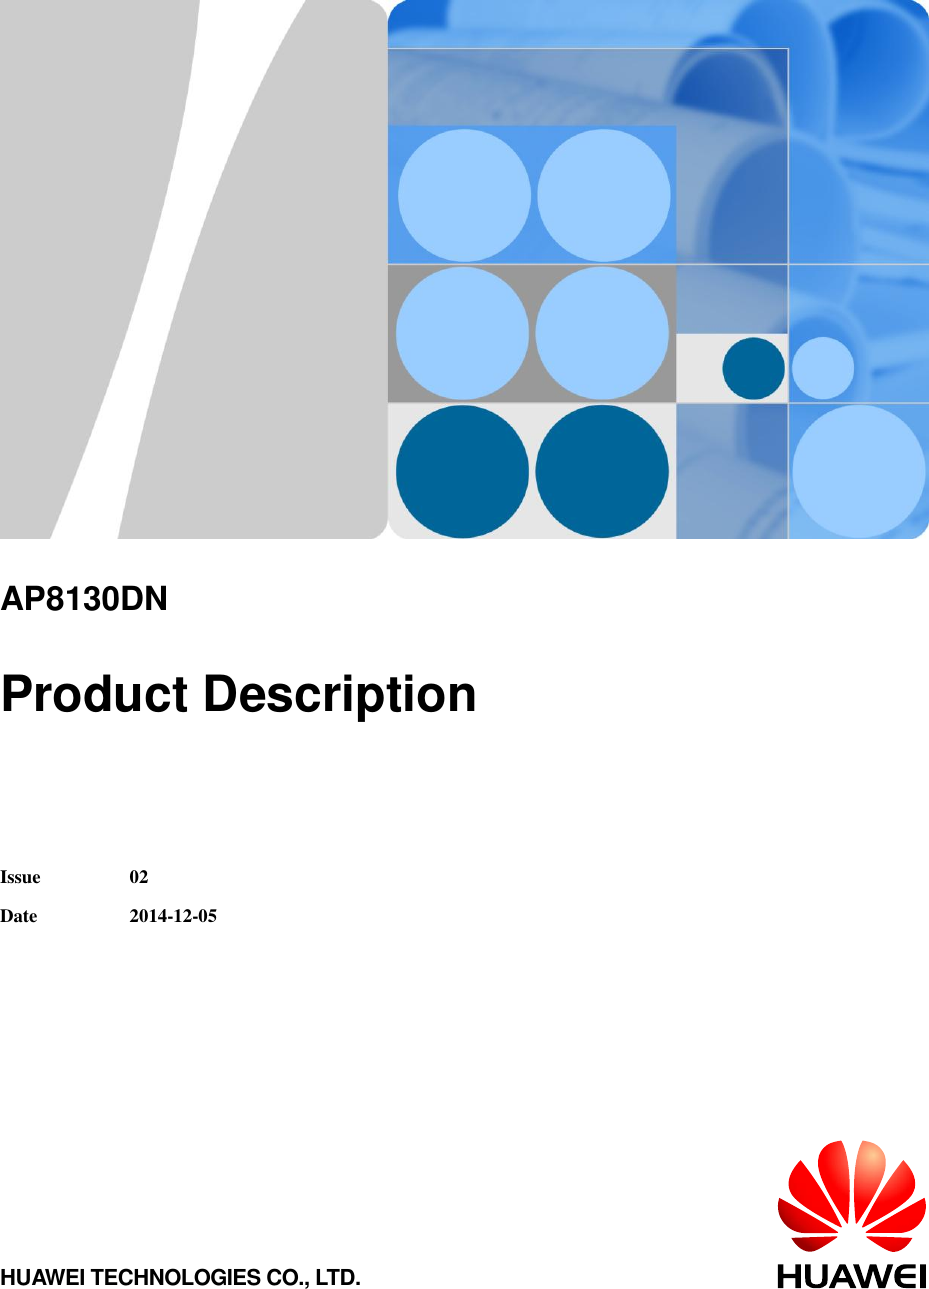         AP8130DN  Product Description   Issue 02 Date 2014-12-05 HUAWEI TECHNOLOGIES CO., LTD. 